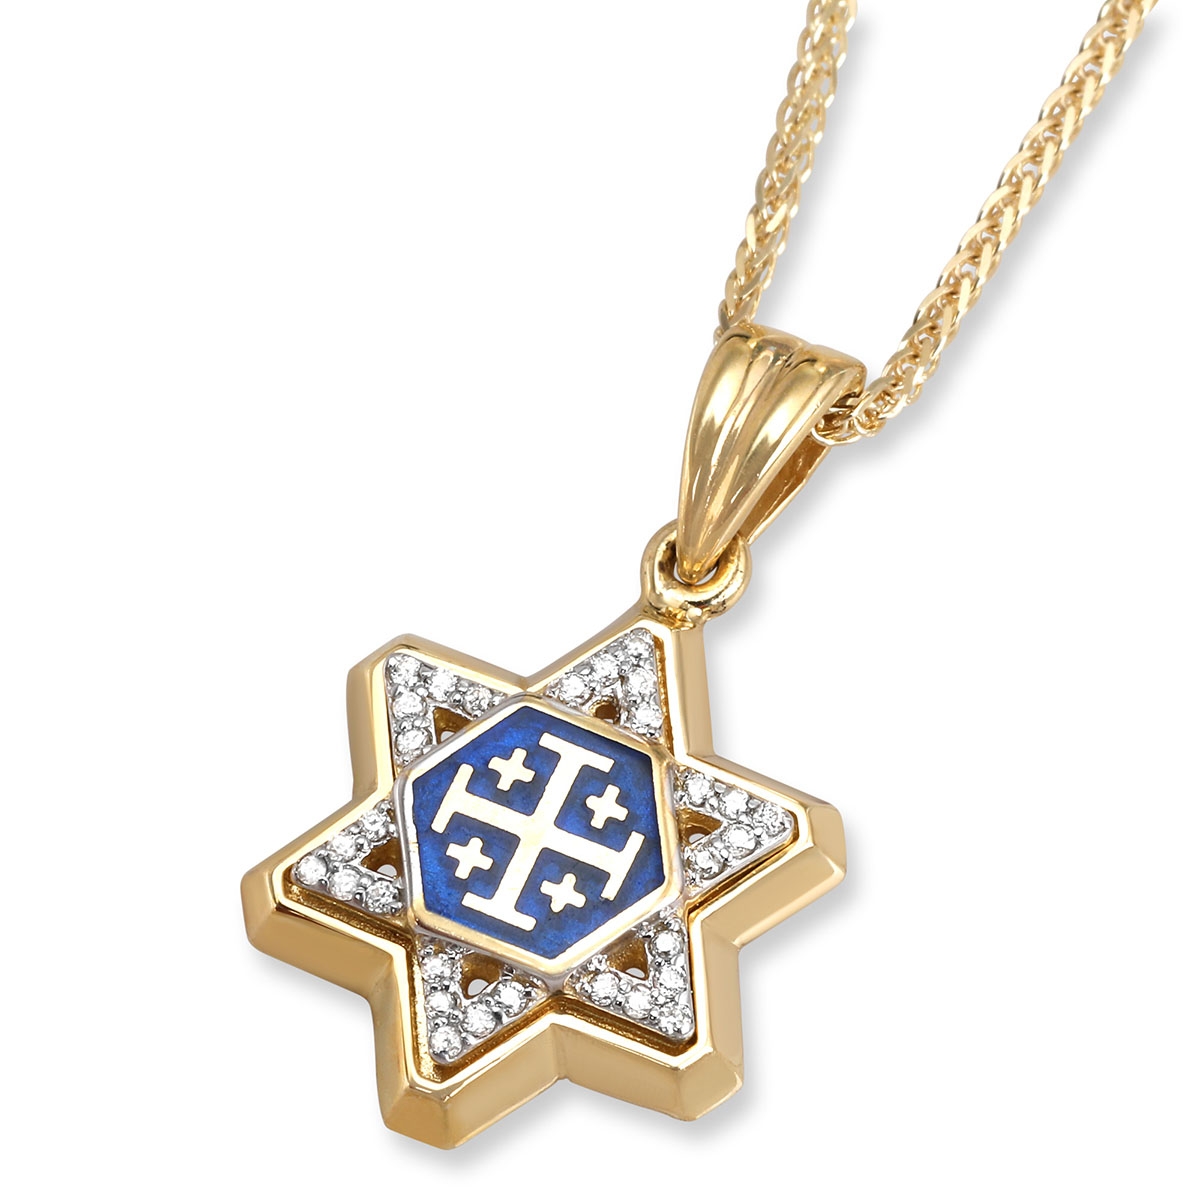 Anbinder 14K Yellow or White Gold Diamond-Set Star of David Pendant with Jerusalem Cross and Blue Enamel Inlay - 1